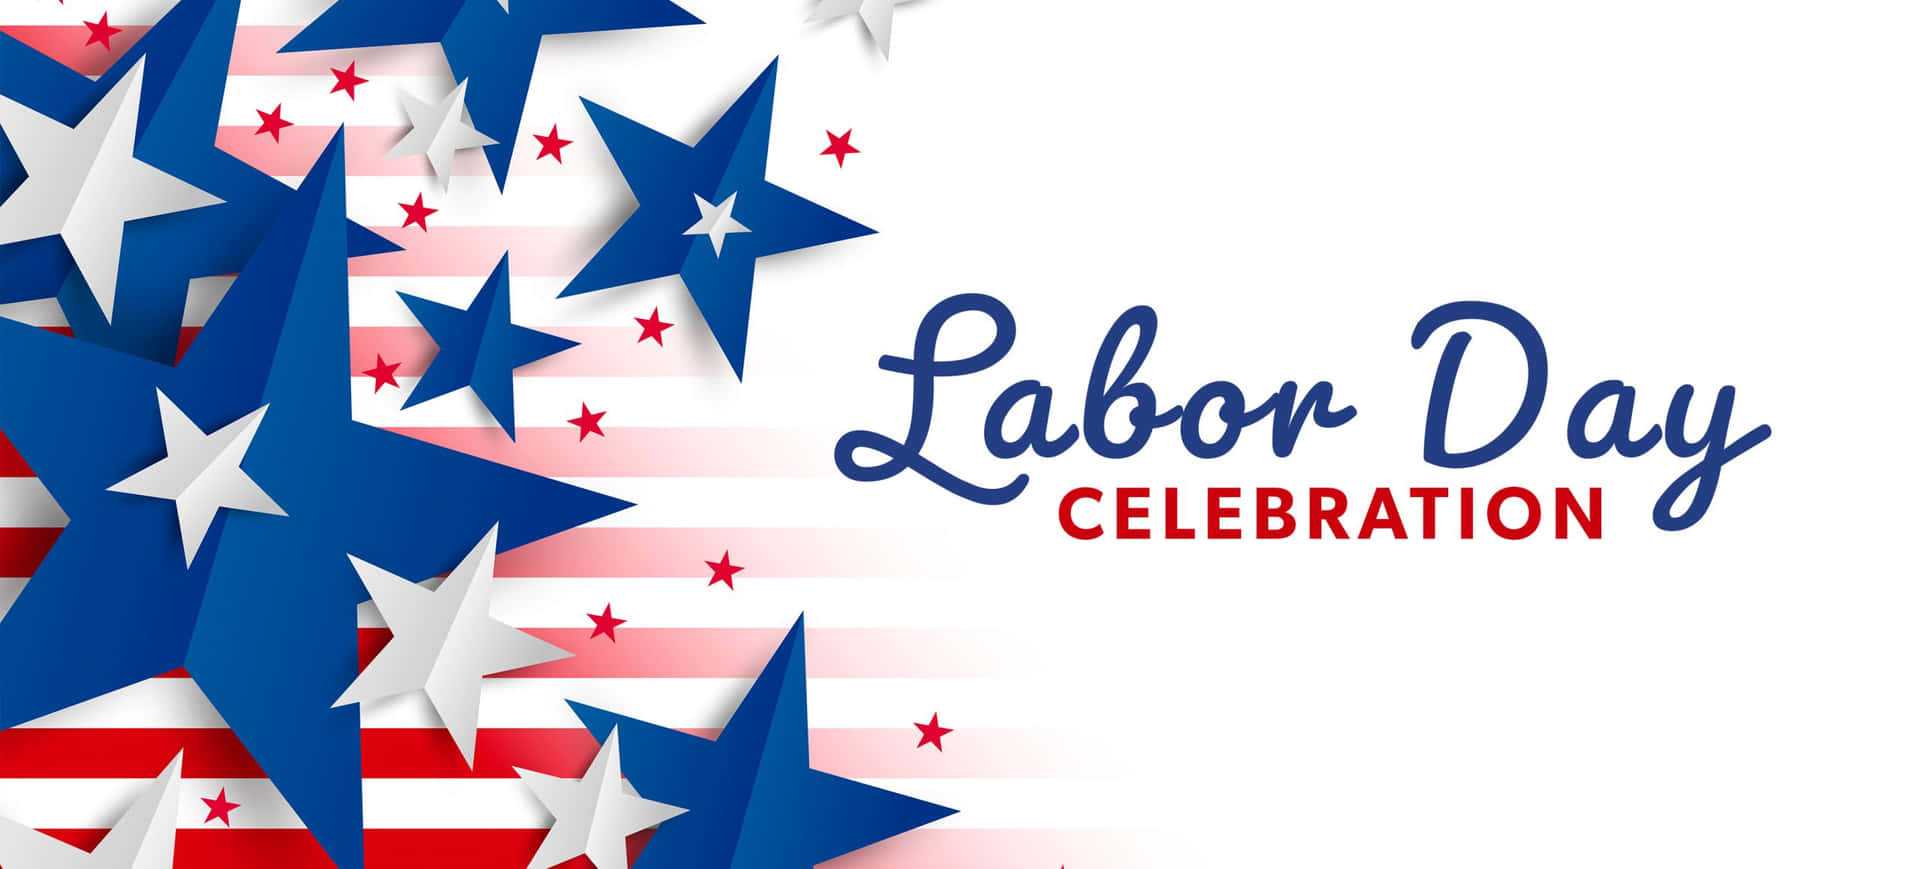 Honor hard work across America on Labor Day